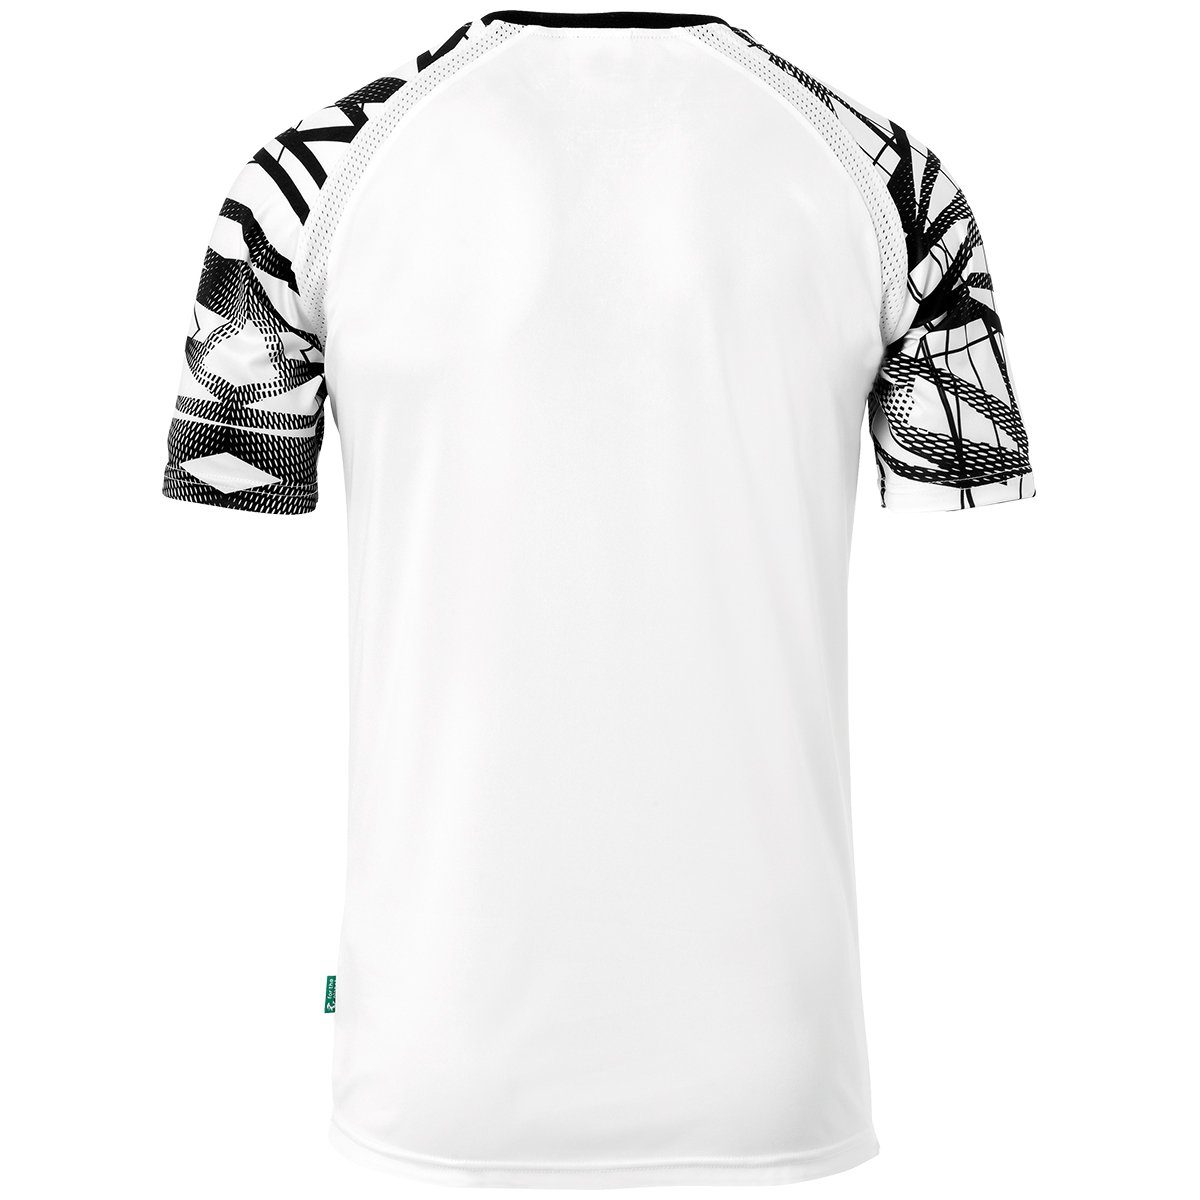 atmungsaktiv Trainingsshirt TRIKOT Trainings-T-Shirt uhlsport GOAL KURZARM 25 uhlsport weiß/schwarz